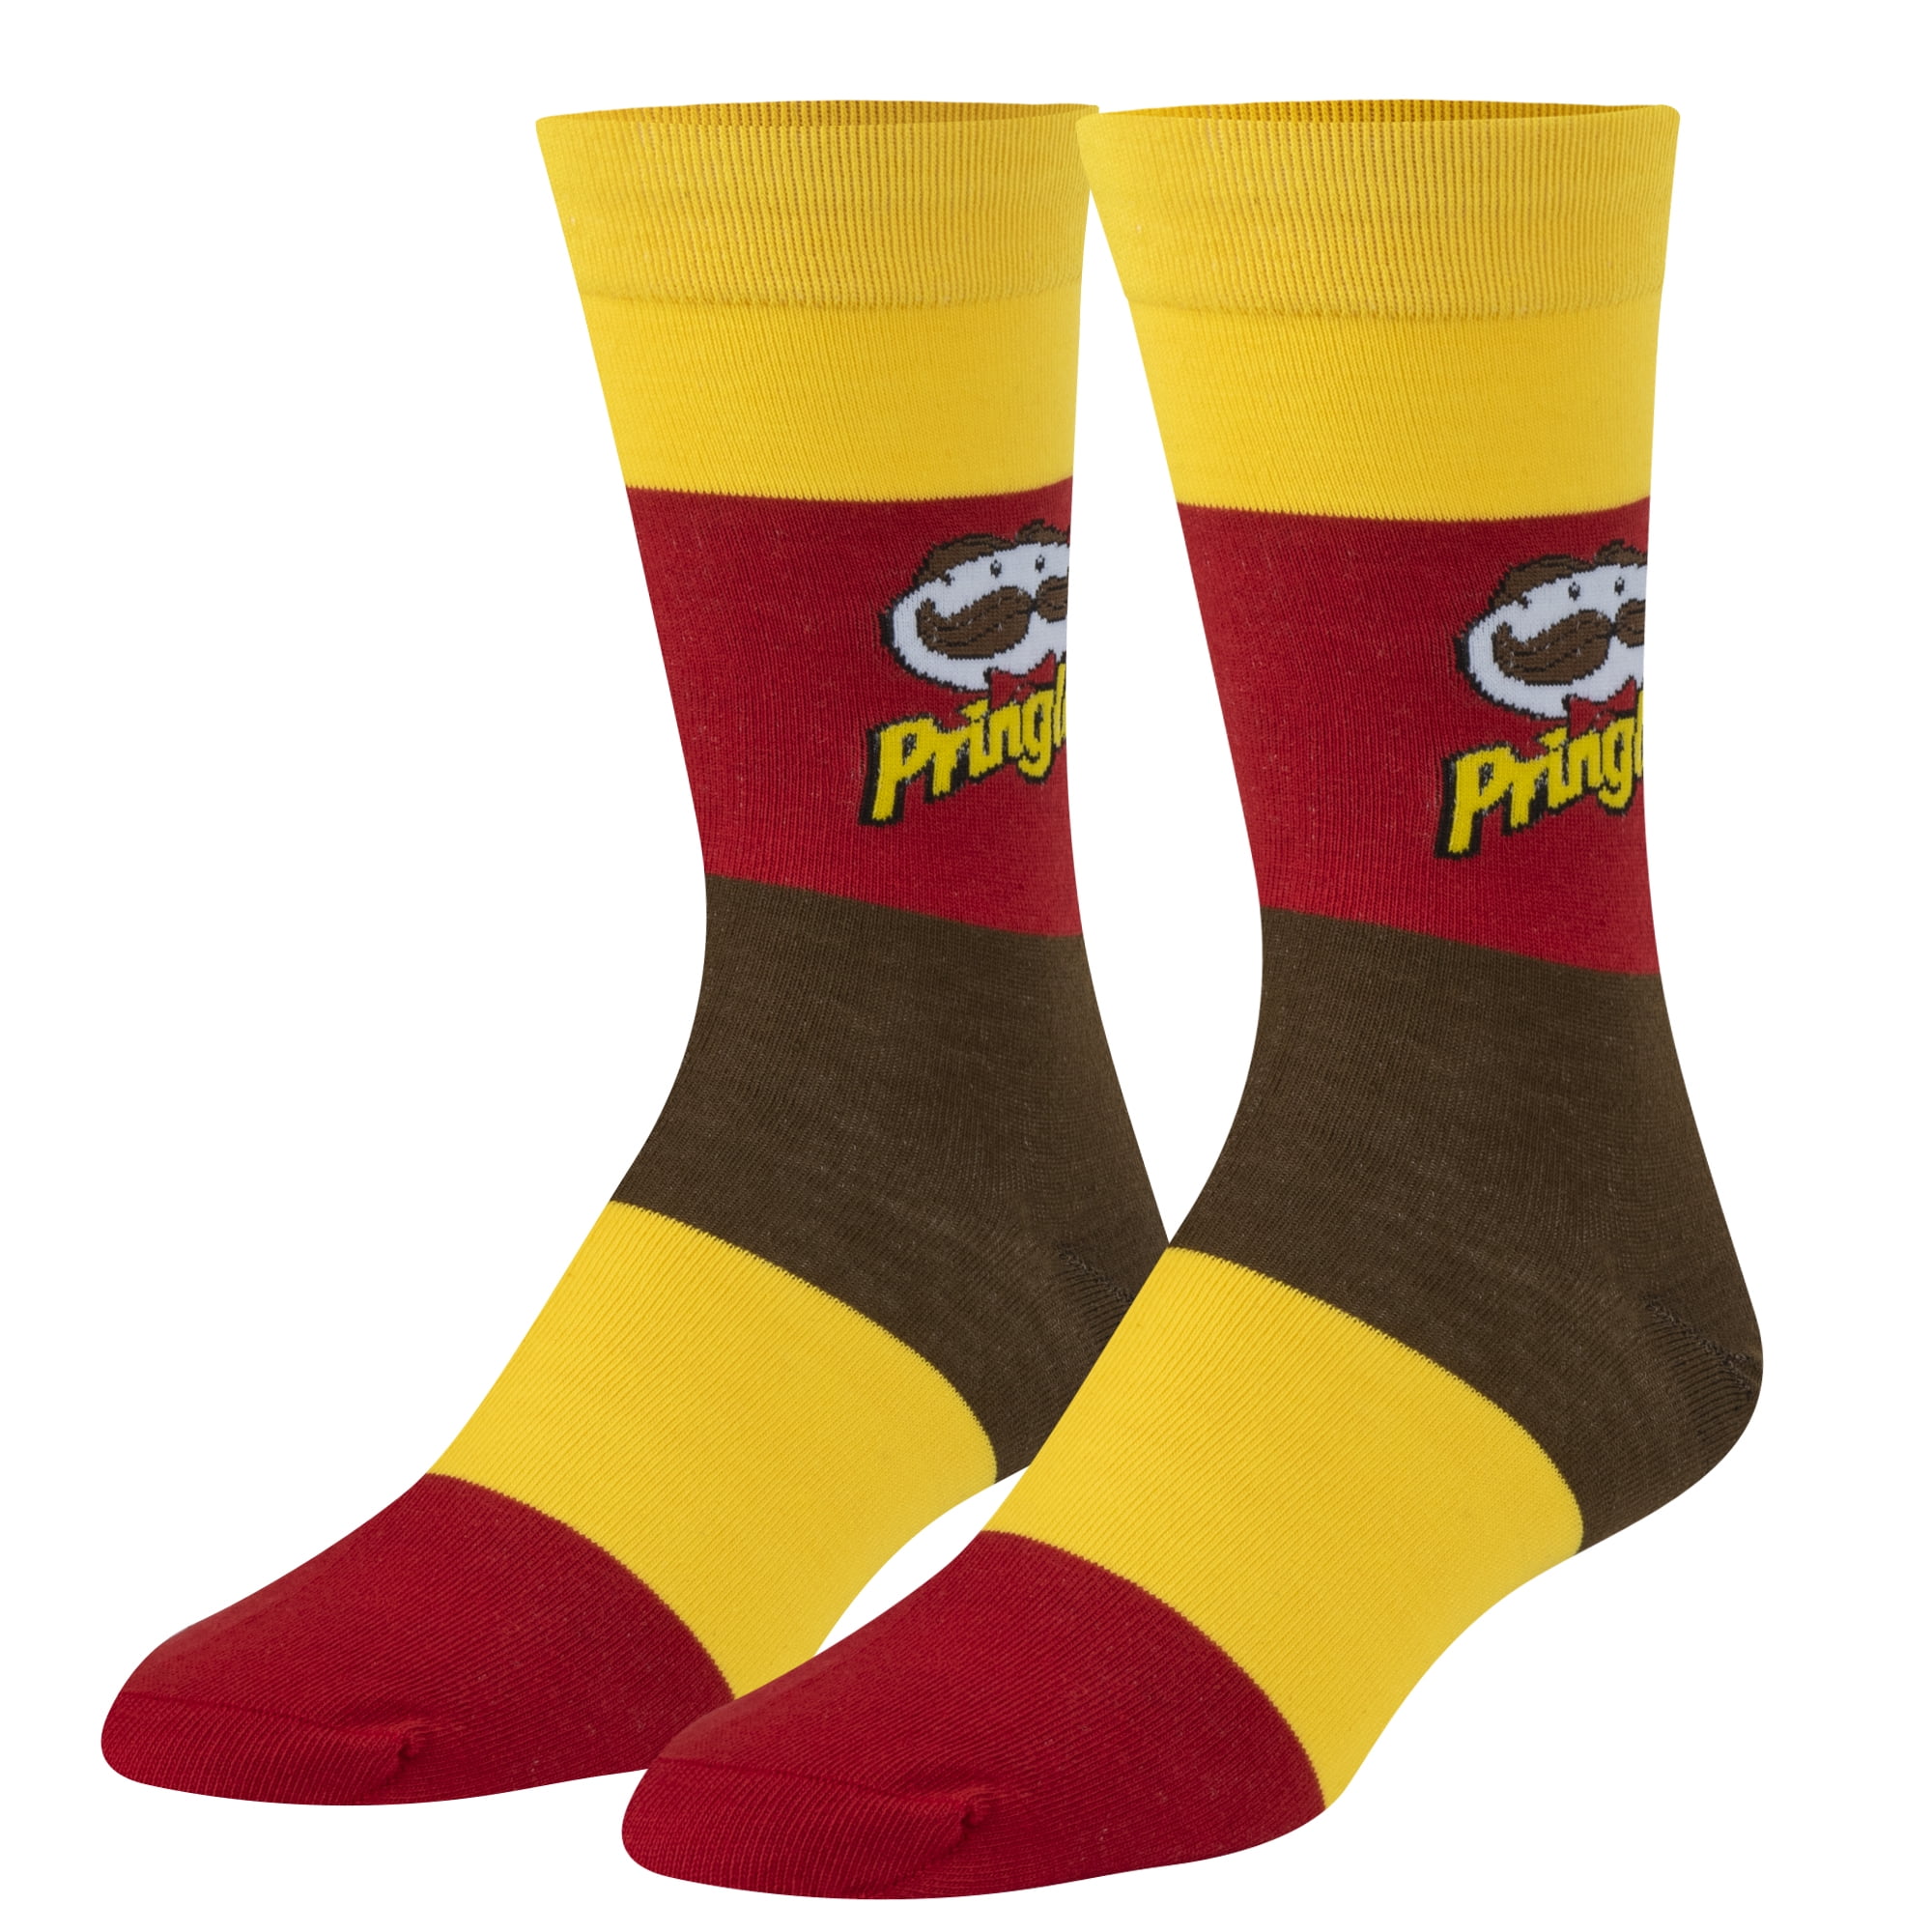 unisex cozy casual socks,fun design Tiger Sock crazy socks,cool socks,gift idea